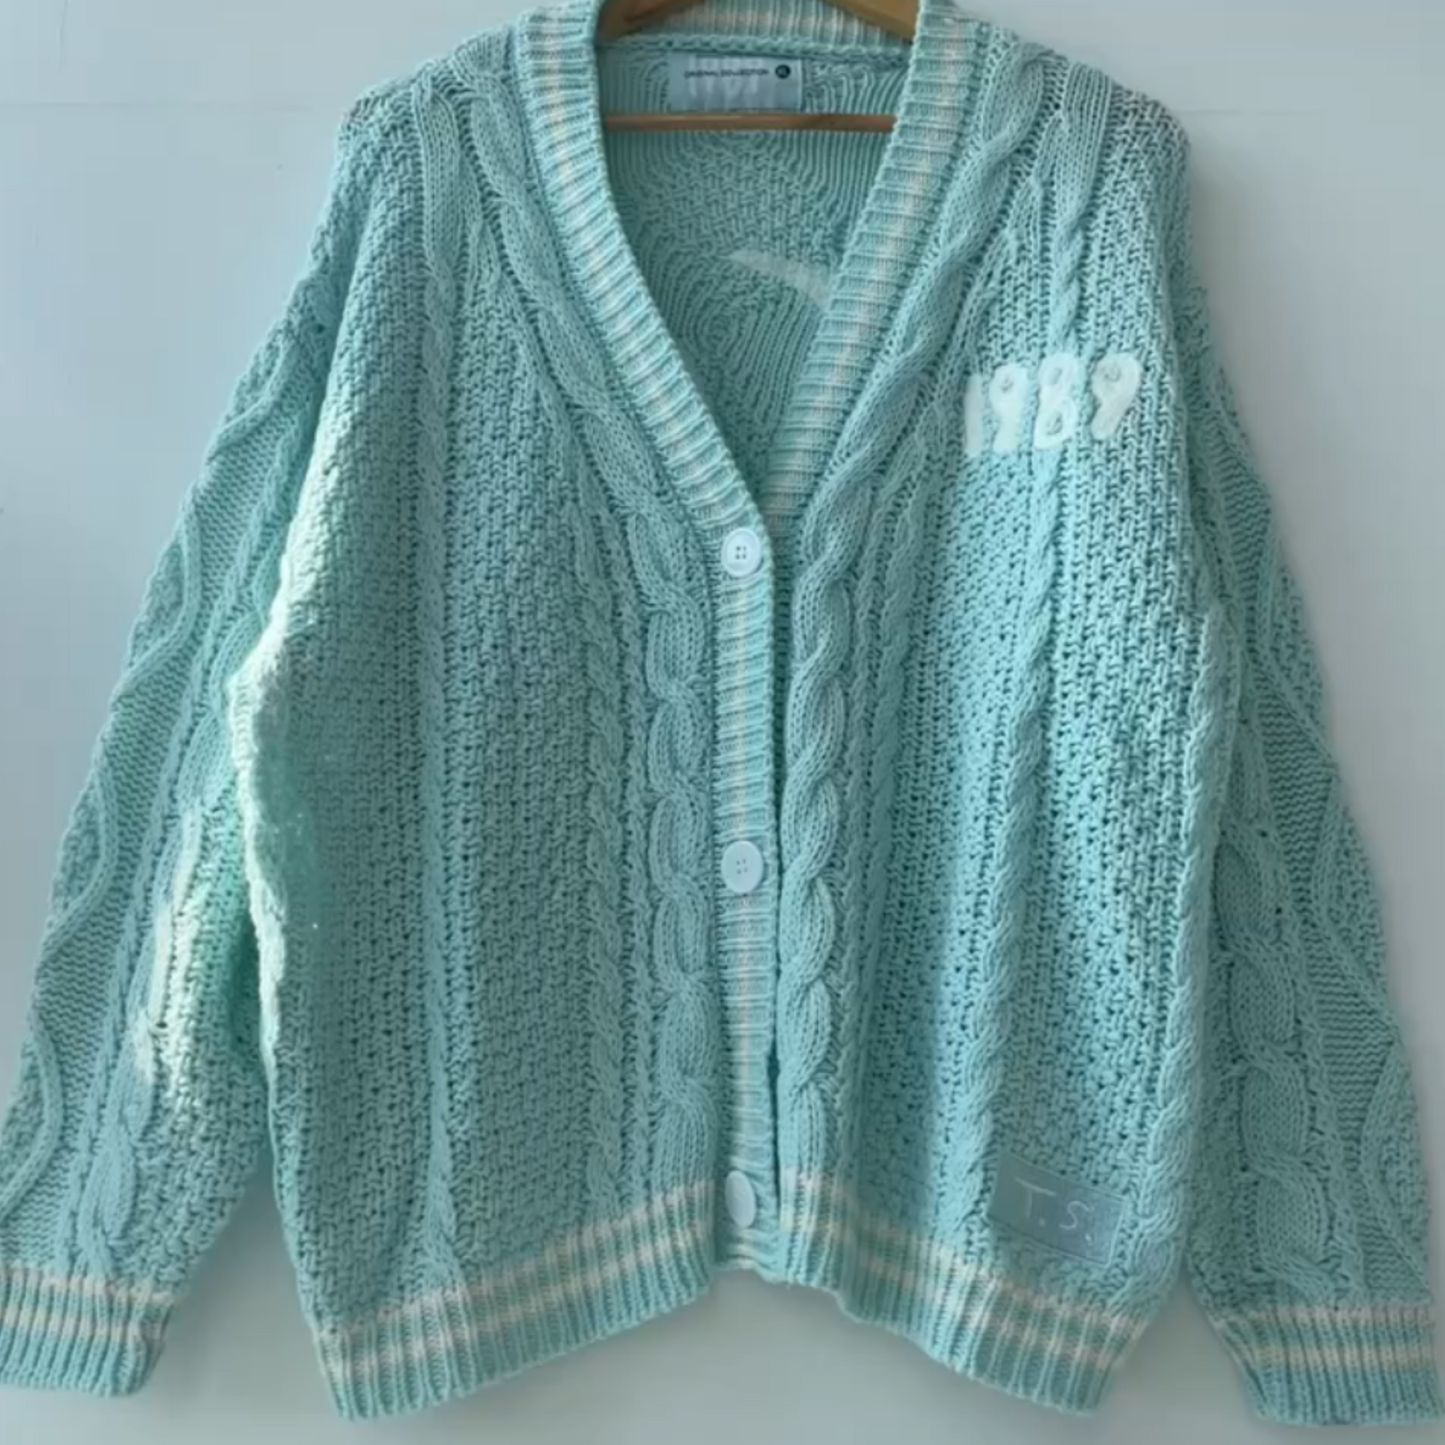 1989 Cardigan Taylor's Version, Sky Blue Cardigan Sweater